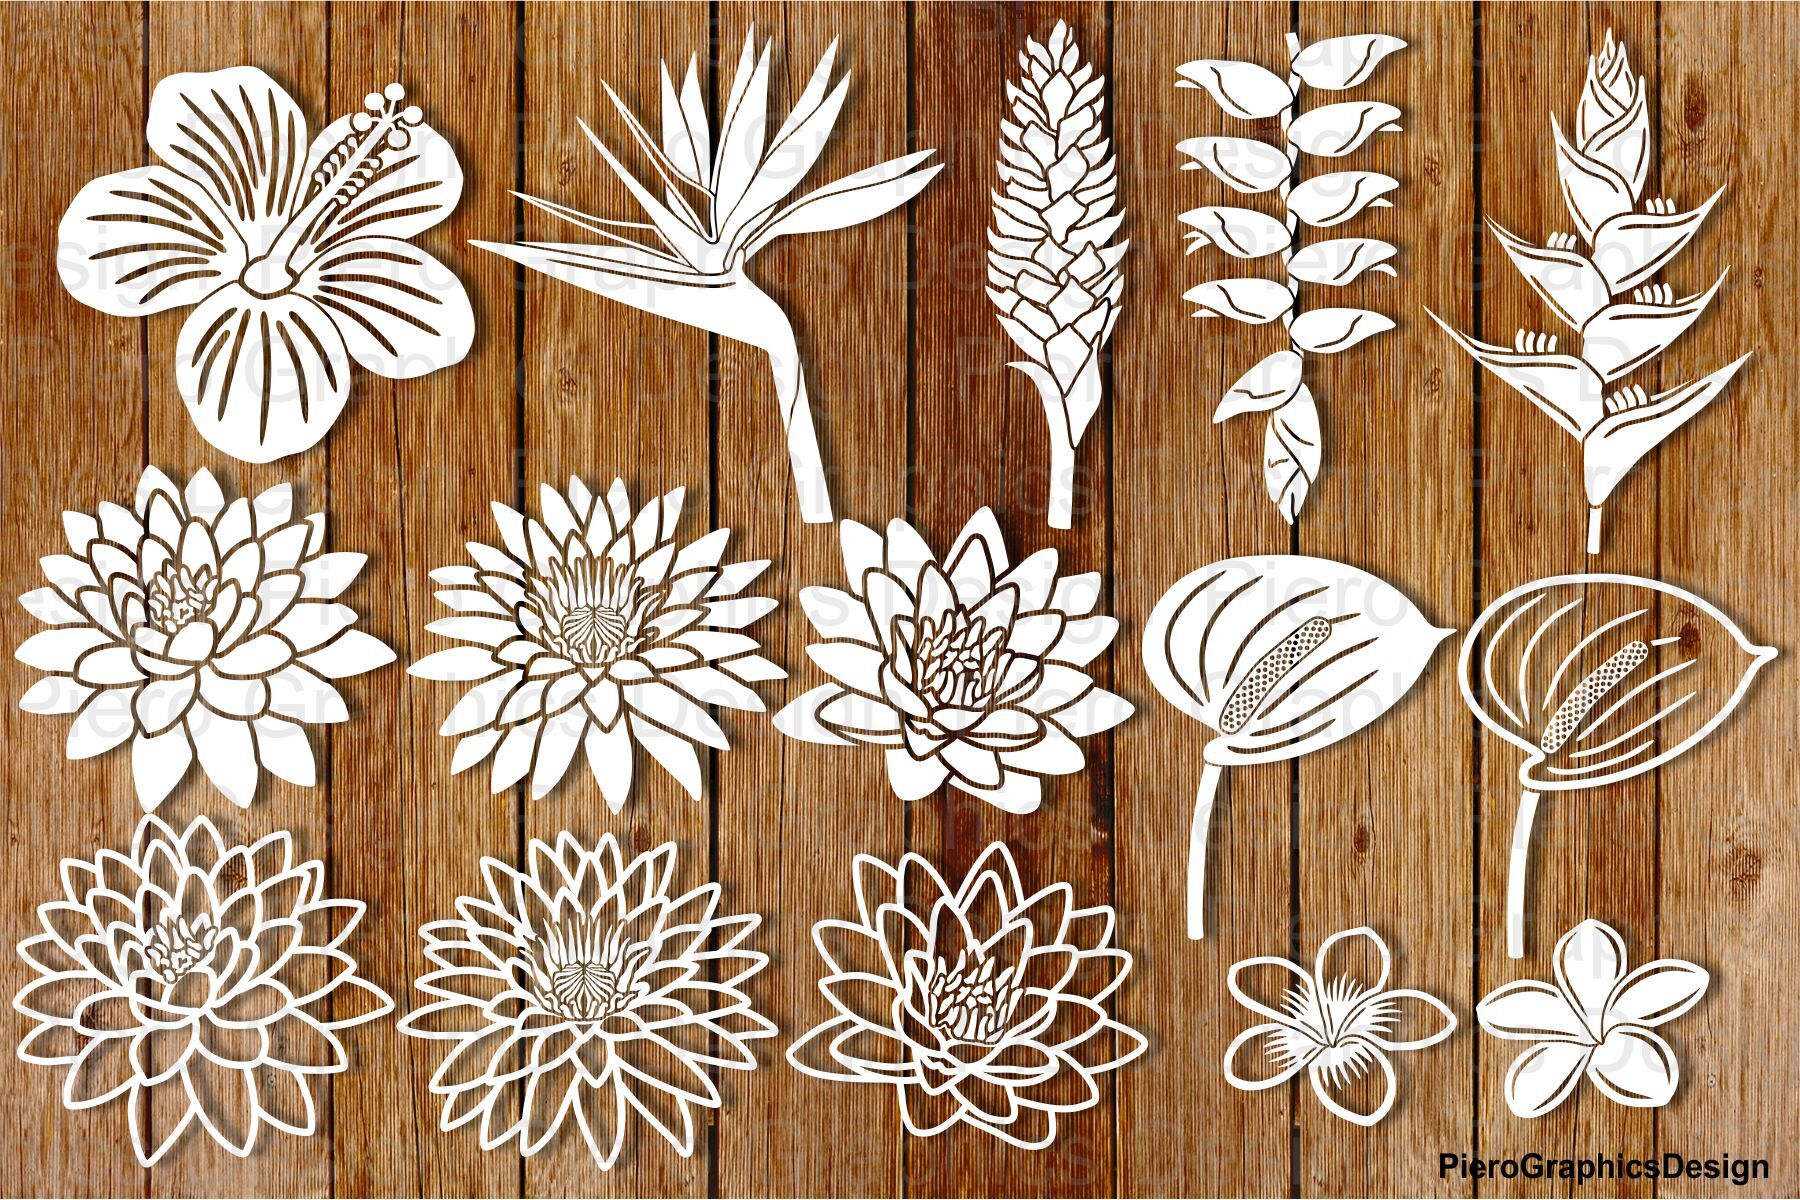 Tropical Flowers SVG files By PieroGraphicsDesign | TheHungryJPEG